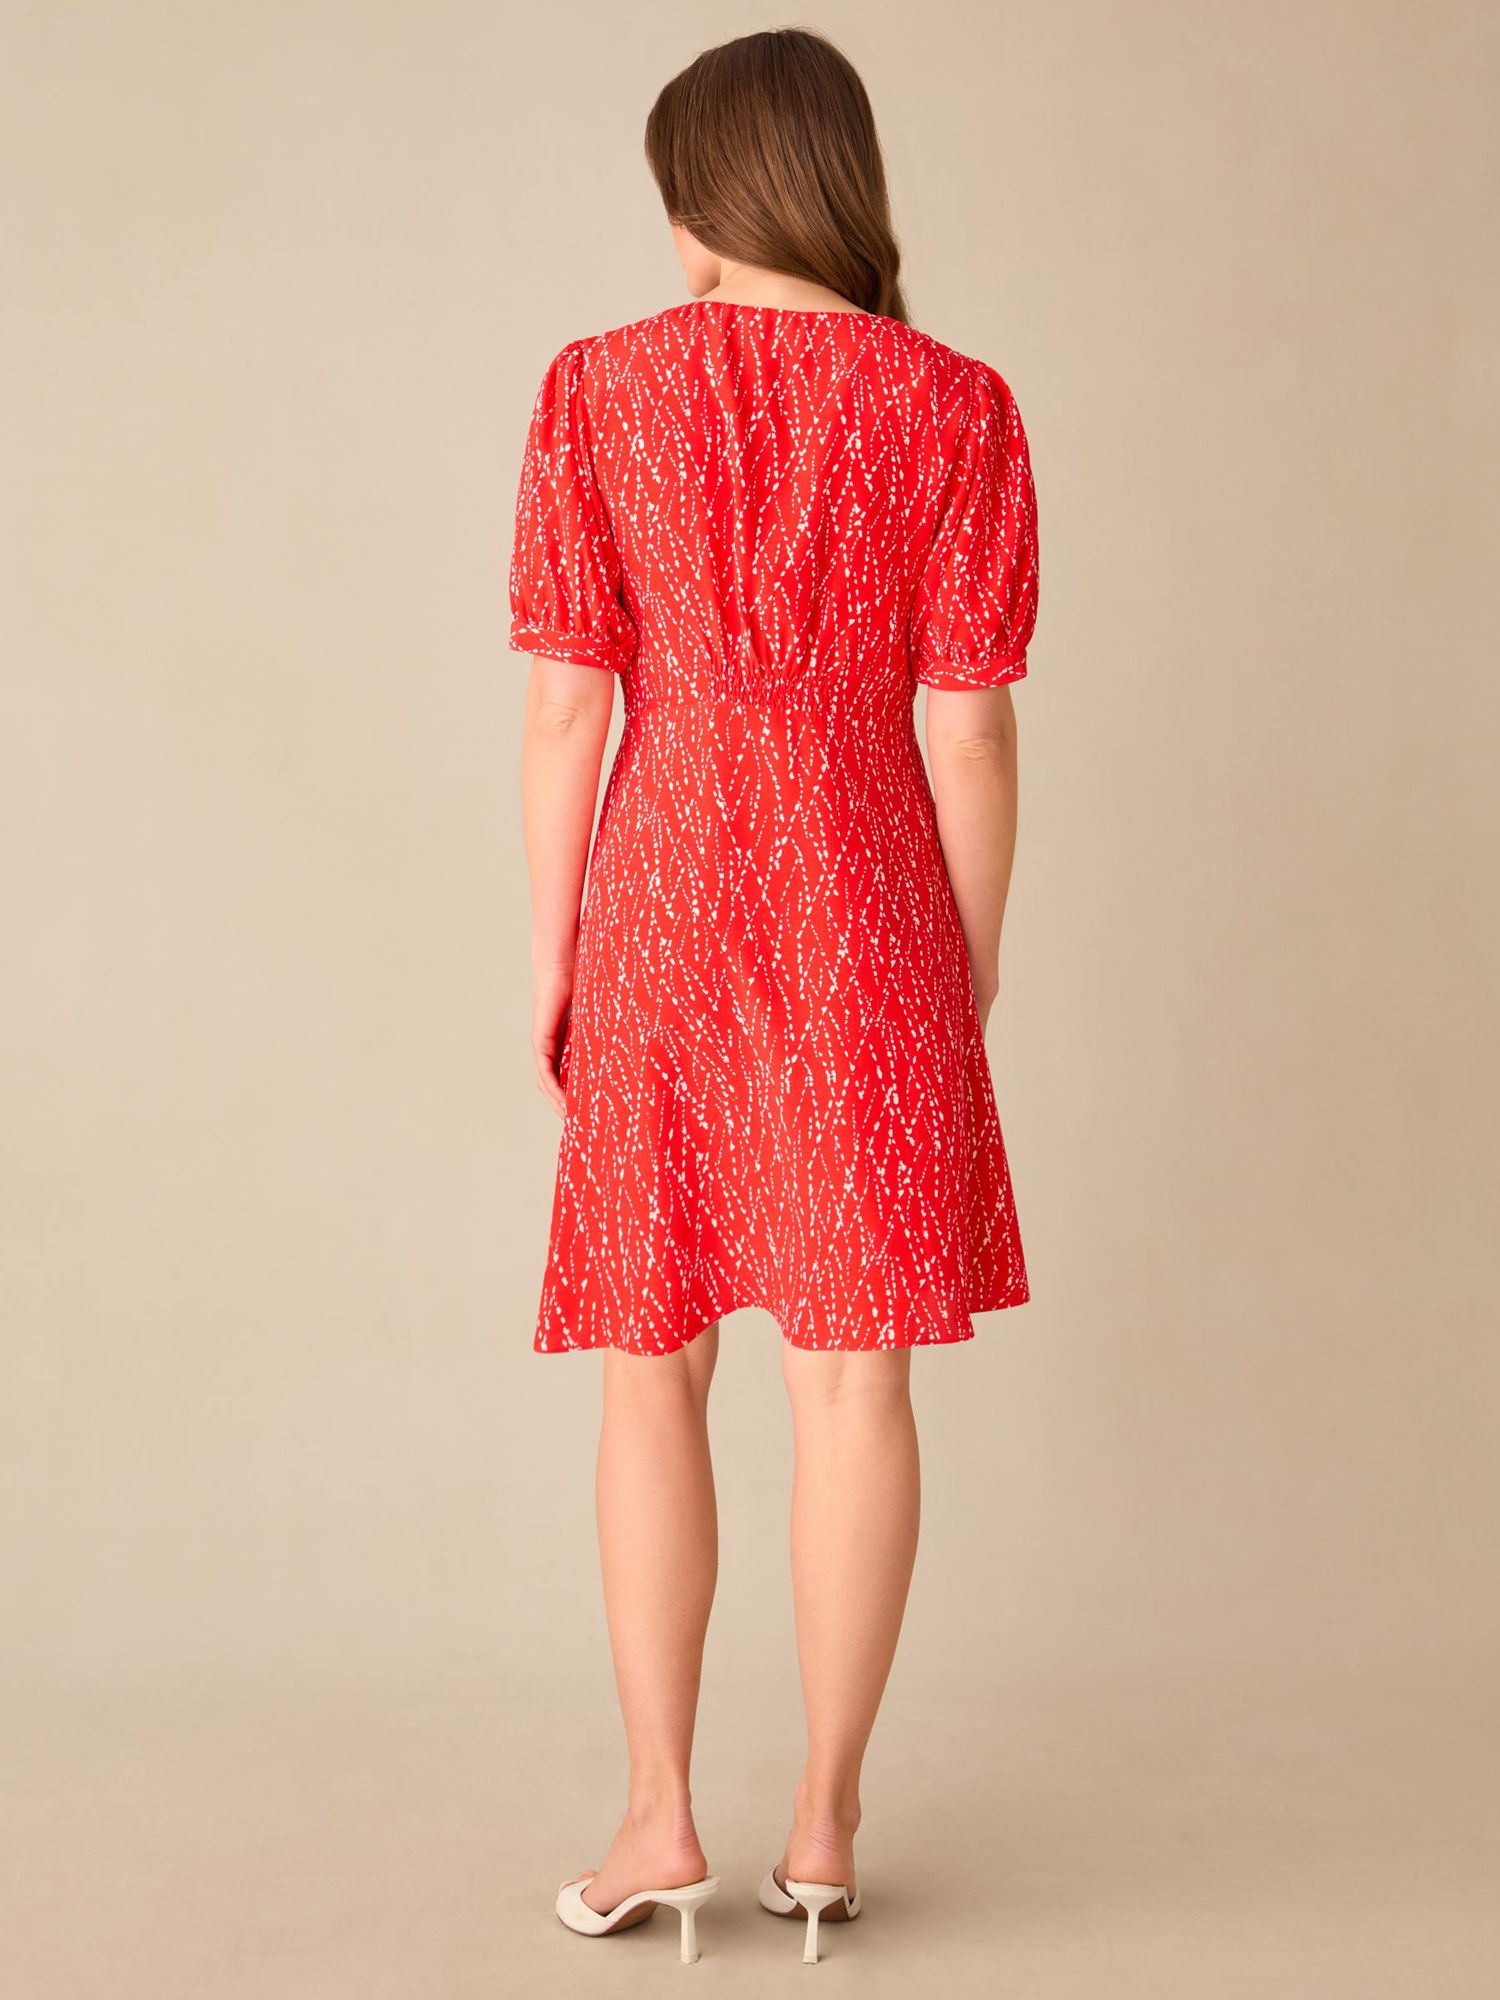 Ro&Zo Petite Abstract Print Mini Dress, Red/White, 6